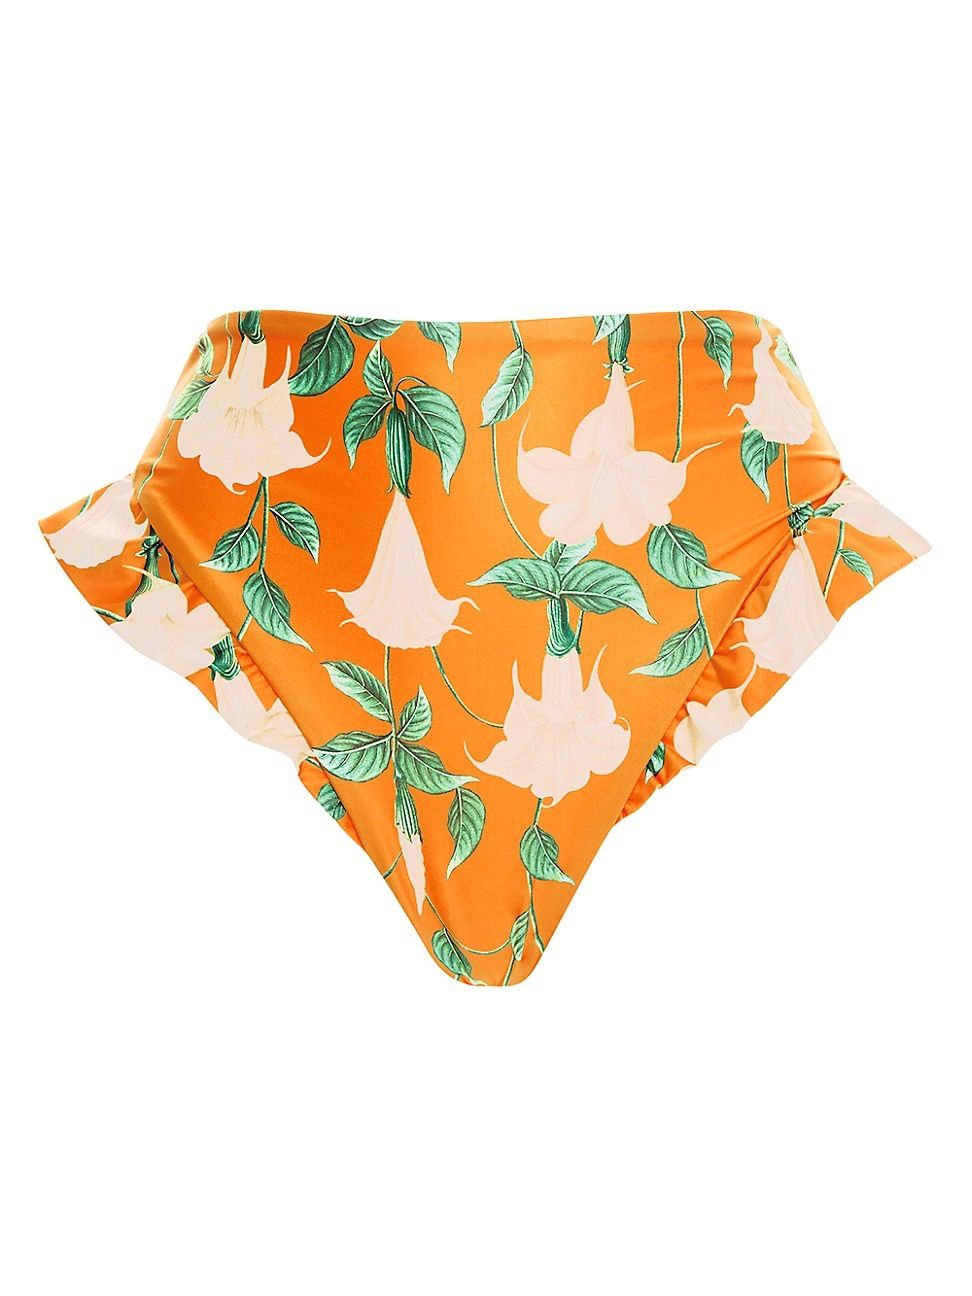 Women's Curandera Jengibre Sabanero Dorado Bikini Bottoms - Orange - Size Small | Saks Fifth Avenue